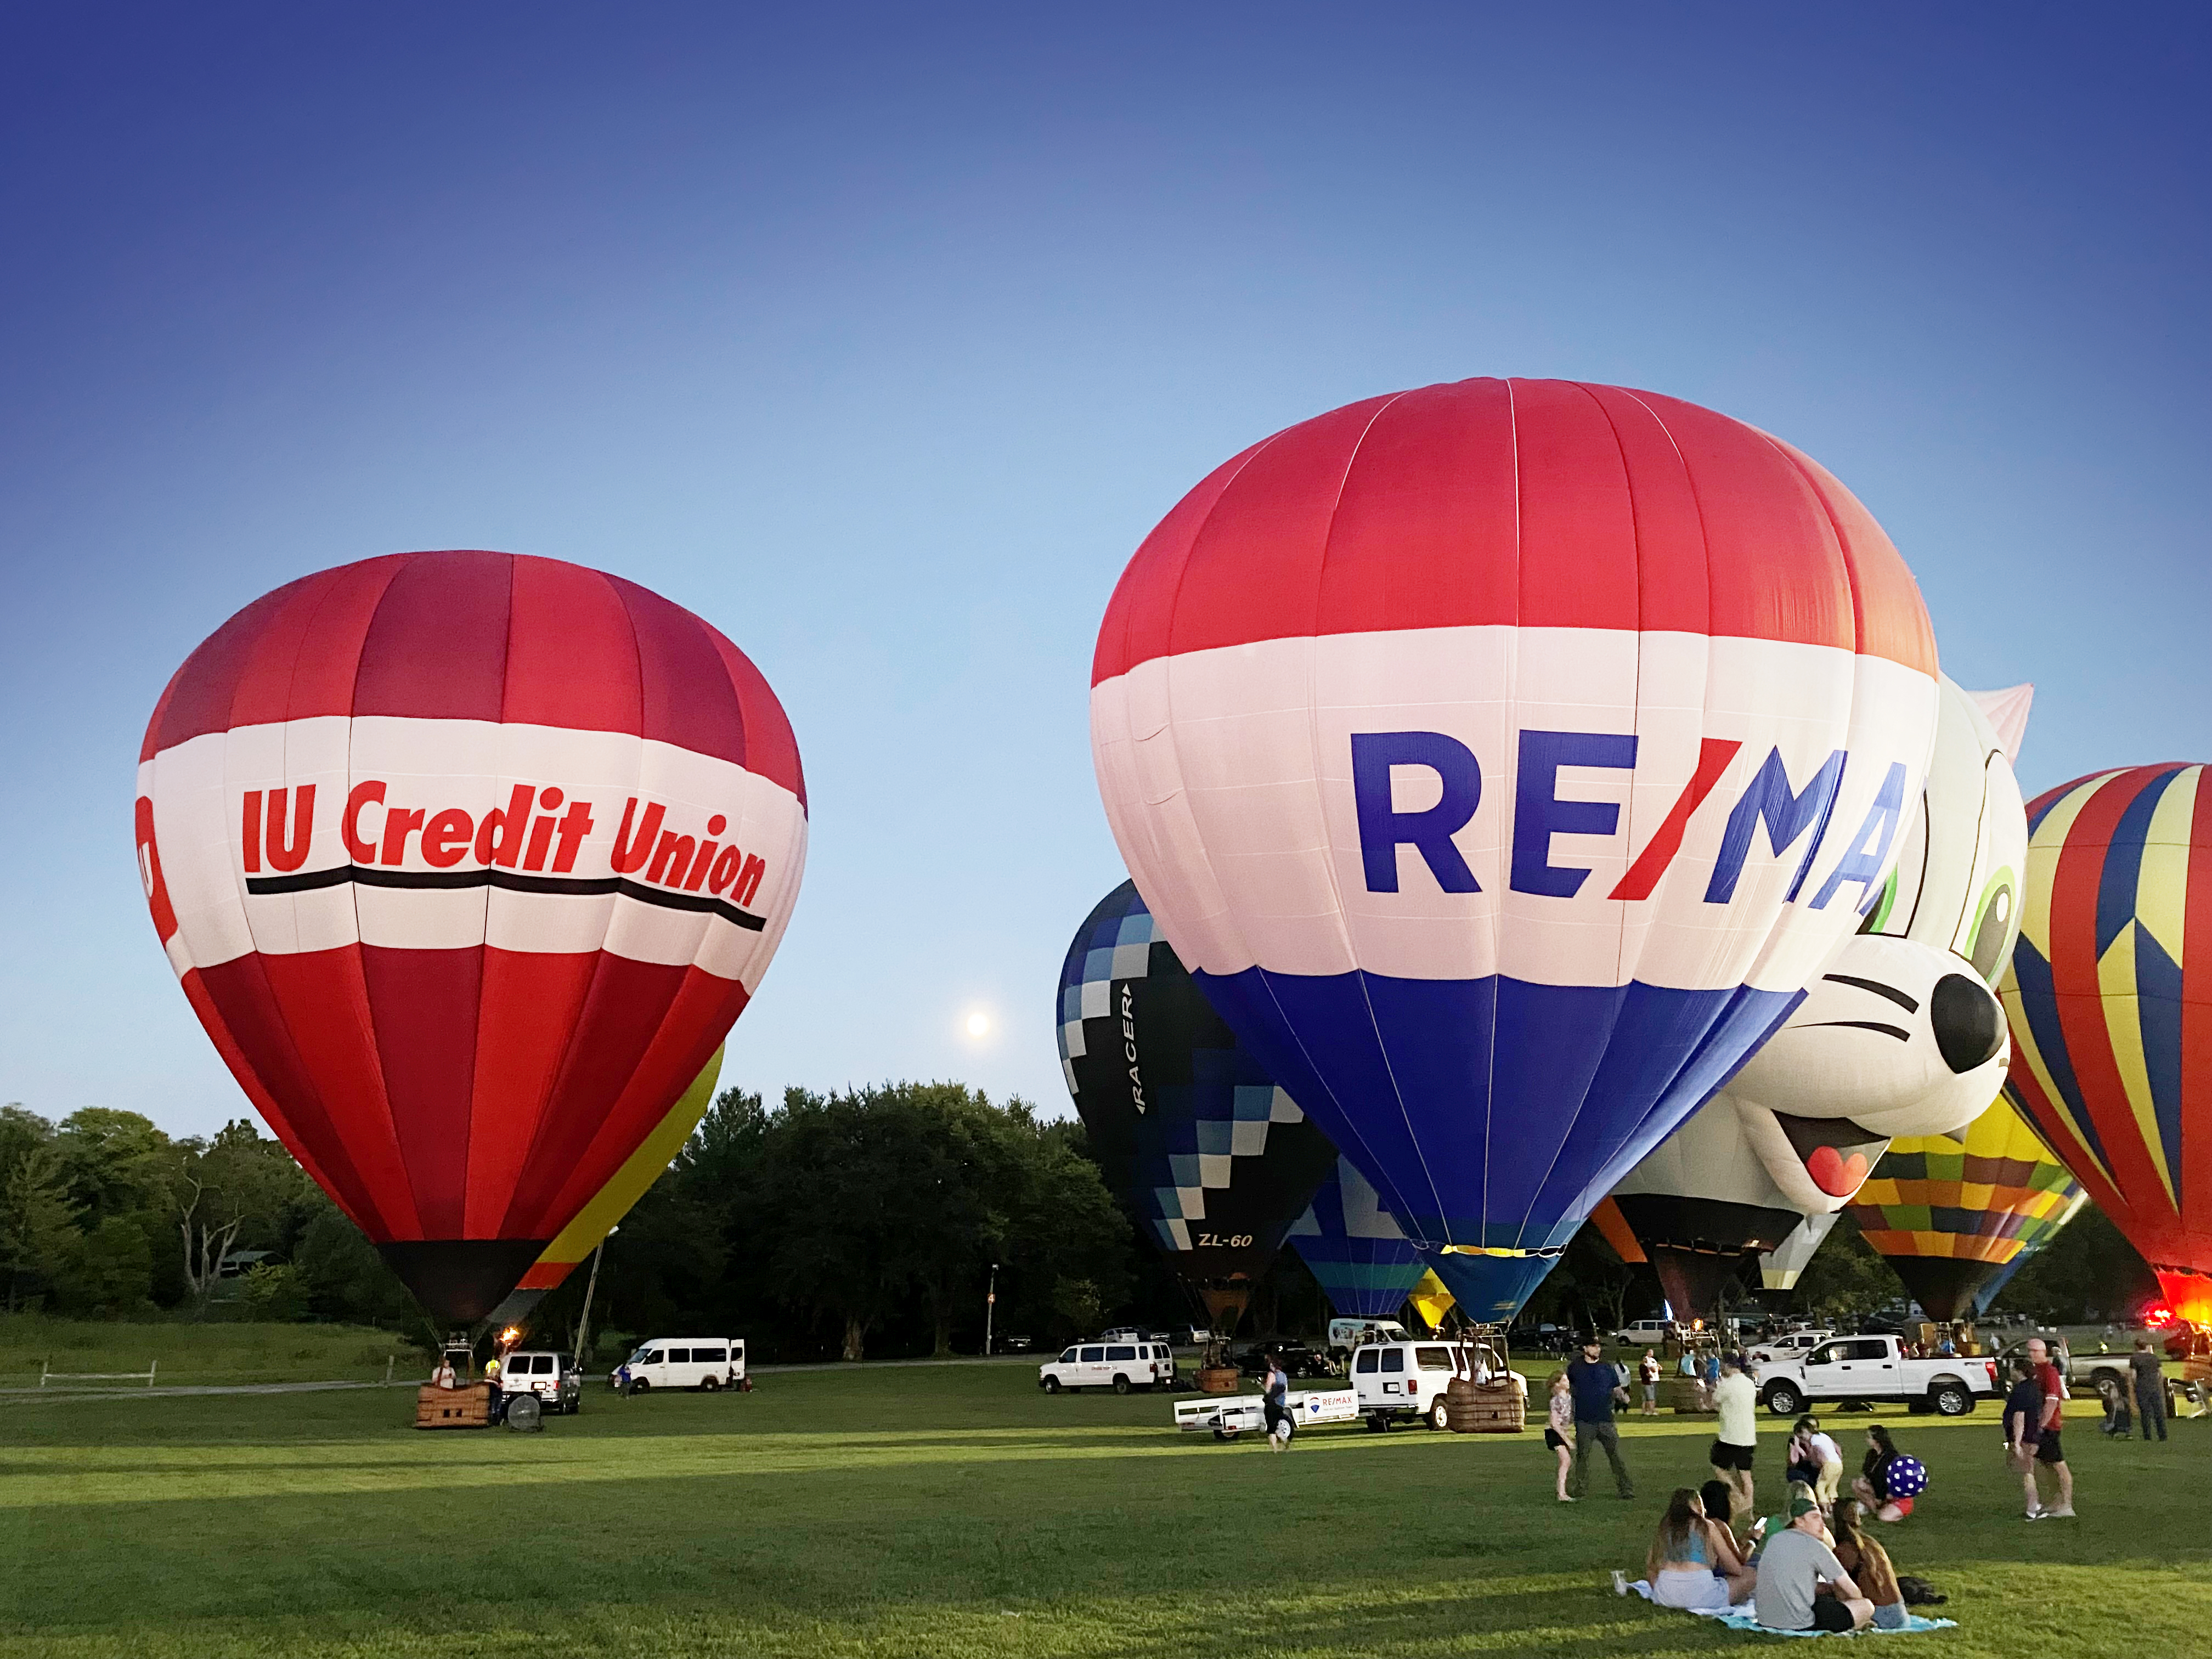 Photo of IU Credit Union Hot Air Balloon at the Kiwanis Indiana Balloon Fest